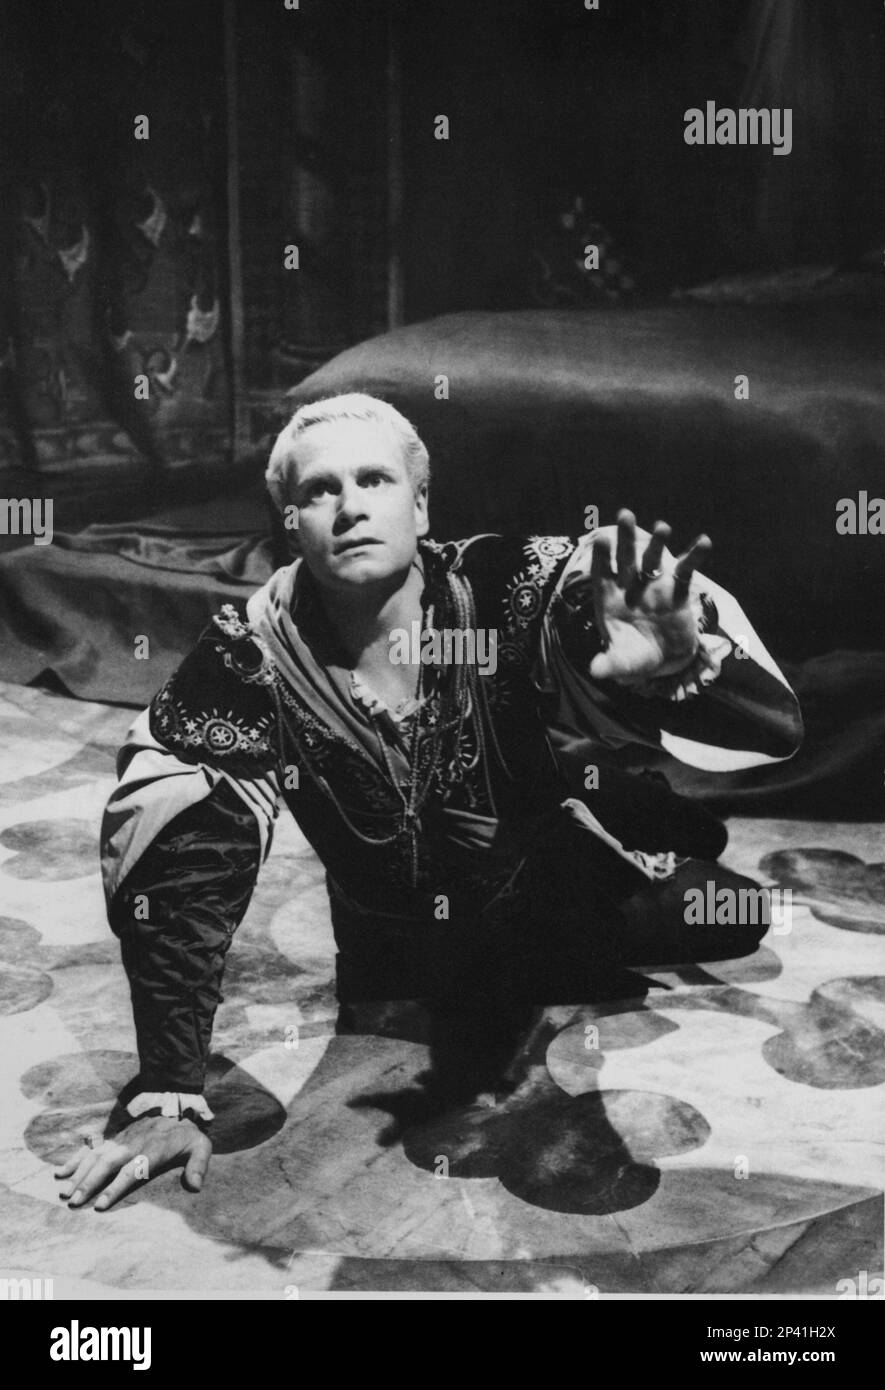 1948 : The british actor Sir LAURENCE OLIVIER ( 1907 - 1989 ) in HAMLET ( Amleto ) by Laurence Olivier , from the play by William Shakespeare - CINEMA - MOVIE - FILM - capelli biondi - blond hair - biondo - blond  - tragedia - tragedy ----  Archivio GBB Stock Photo